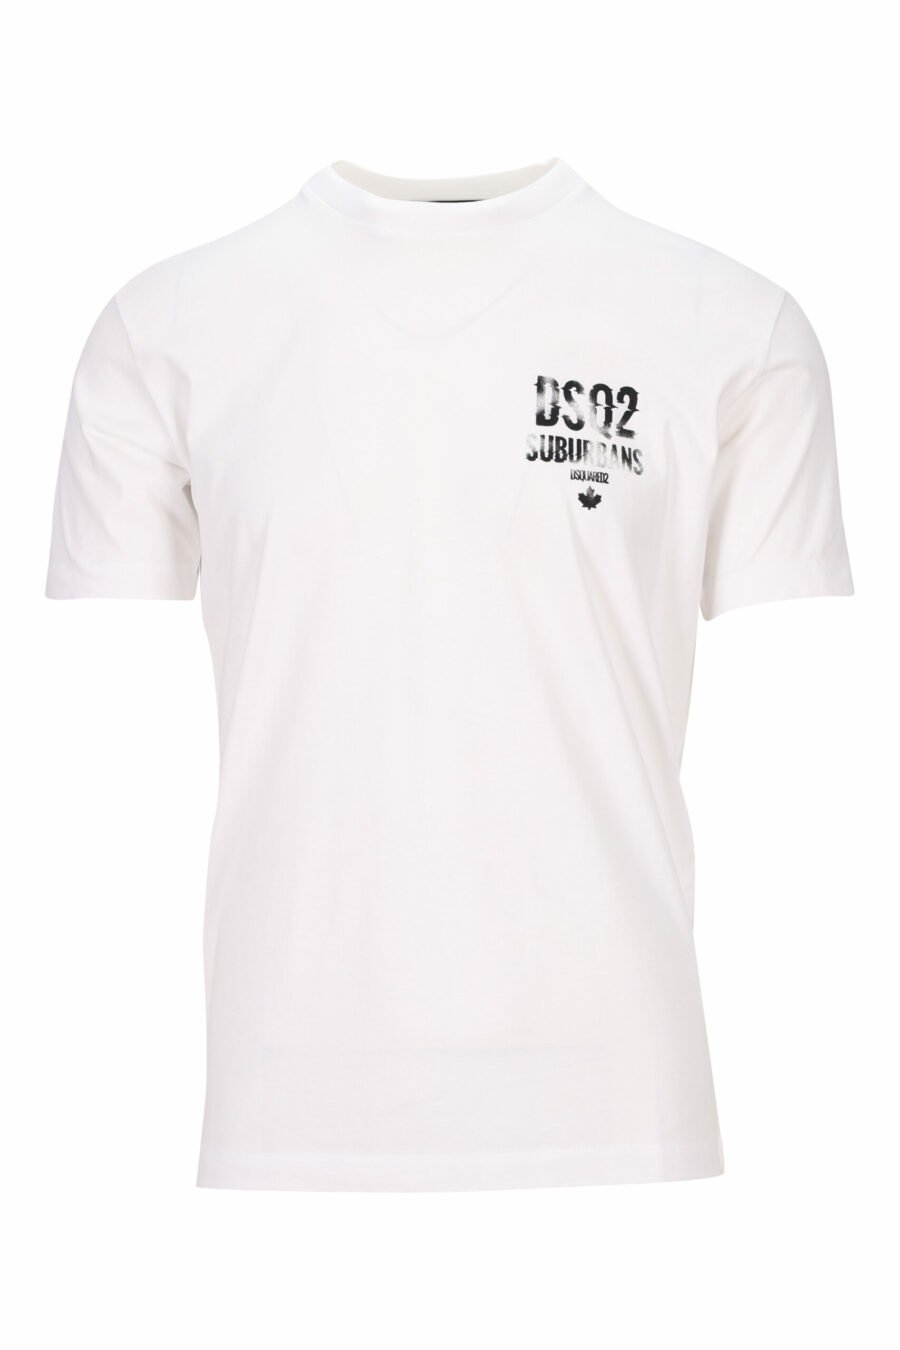 Camiseta blanca con minilogo "suburbans" negro - 8054148512842 scaled